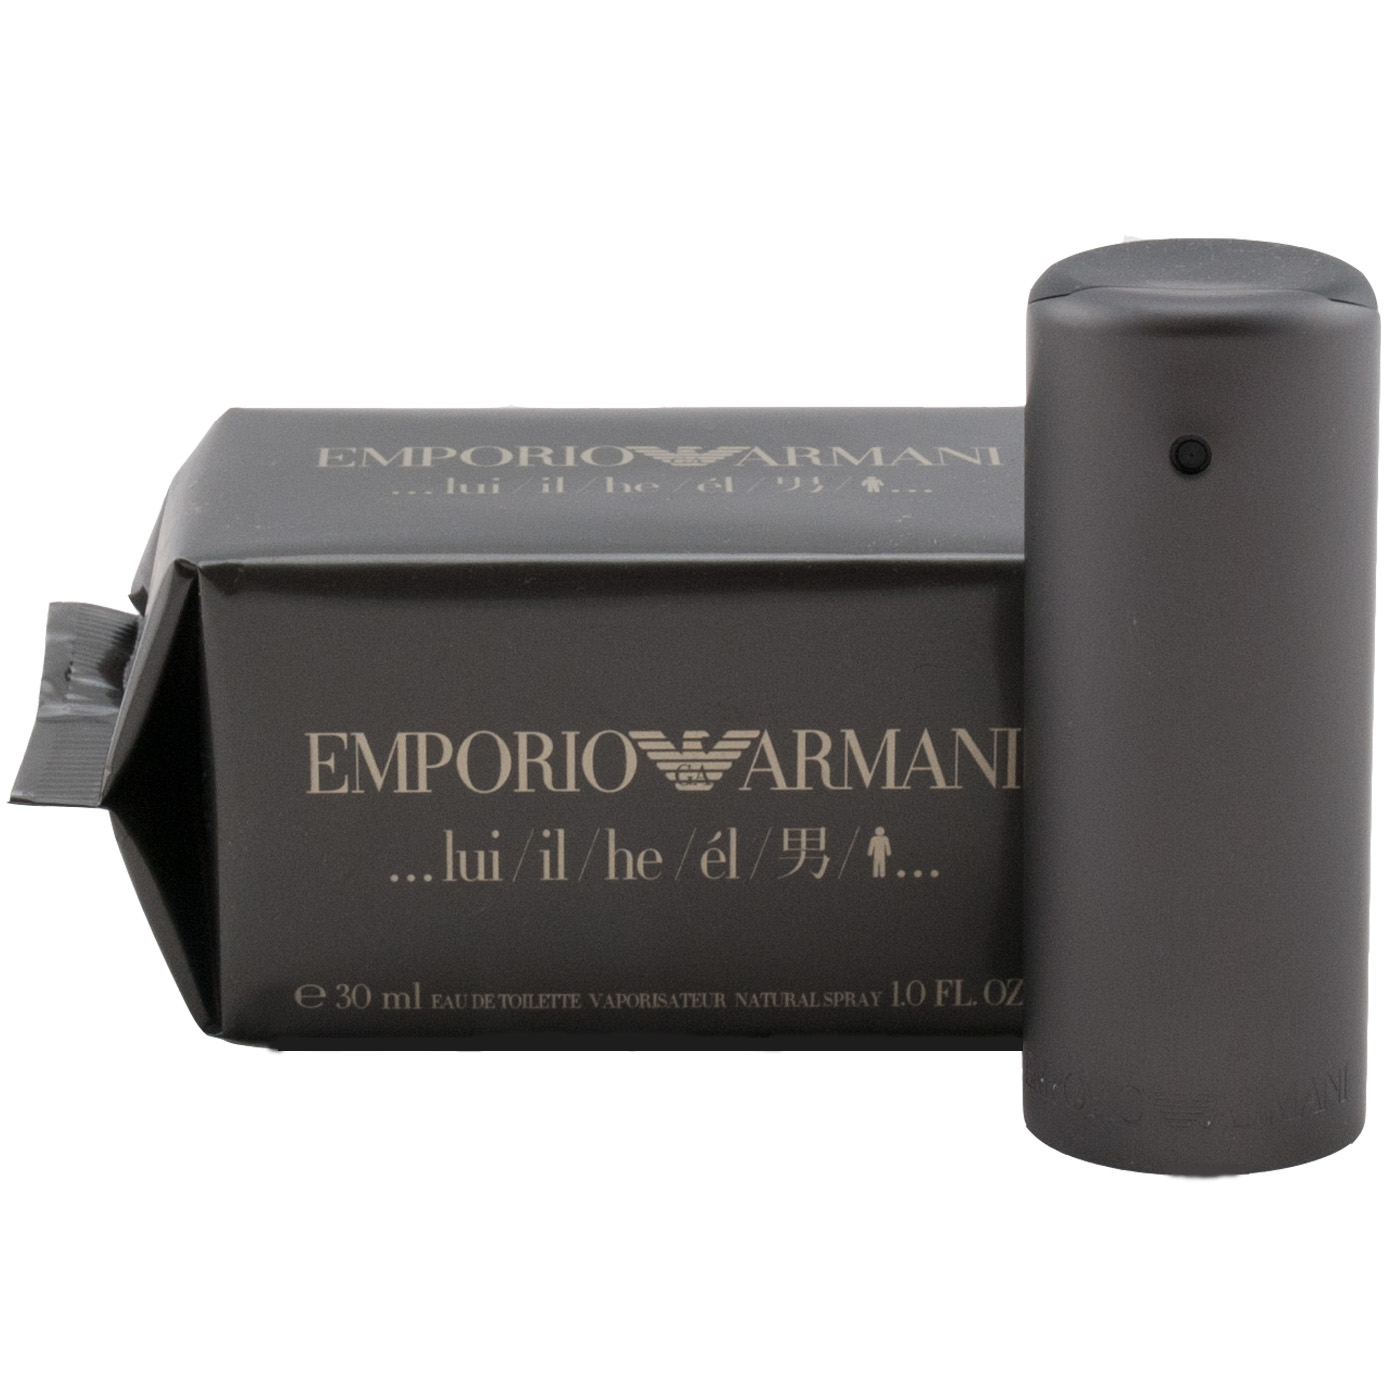 Giorgio Emporio Armani He 30 ml. Eau de Toilette EDT Spray for Man | eBay